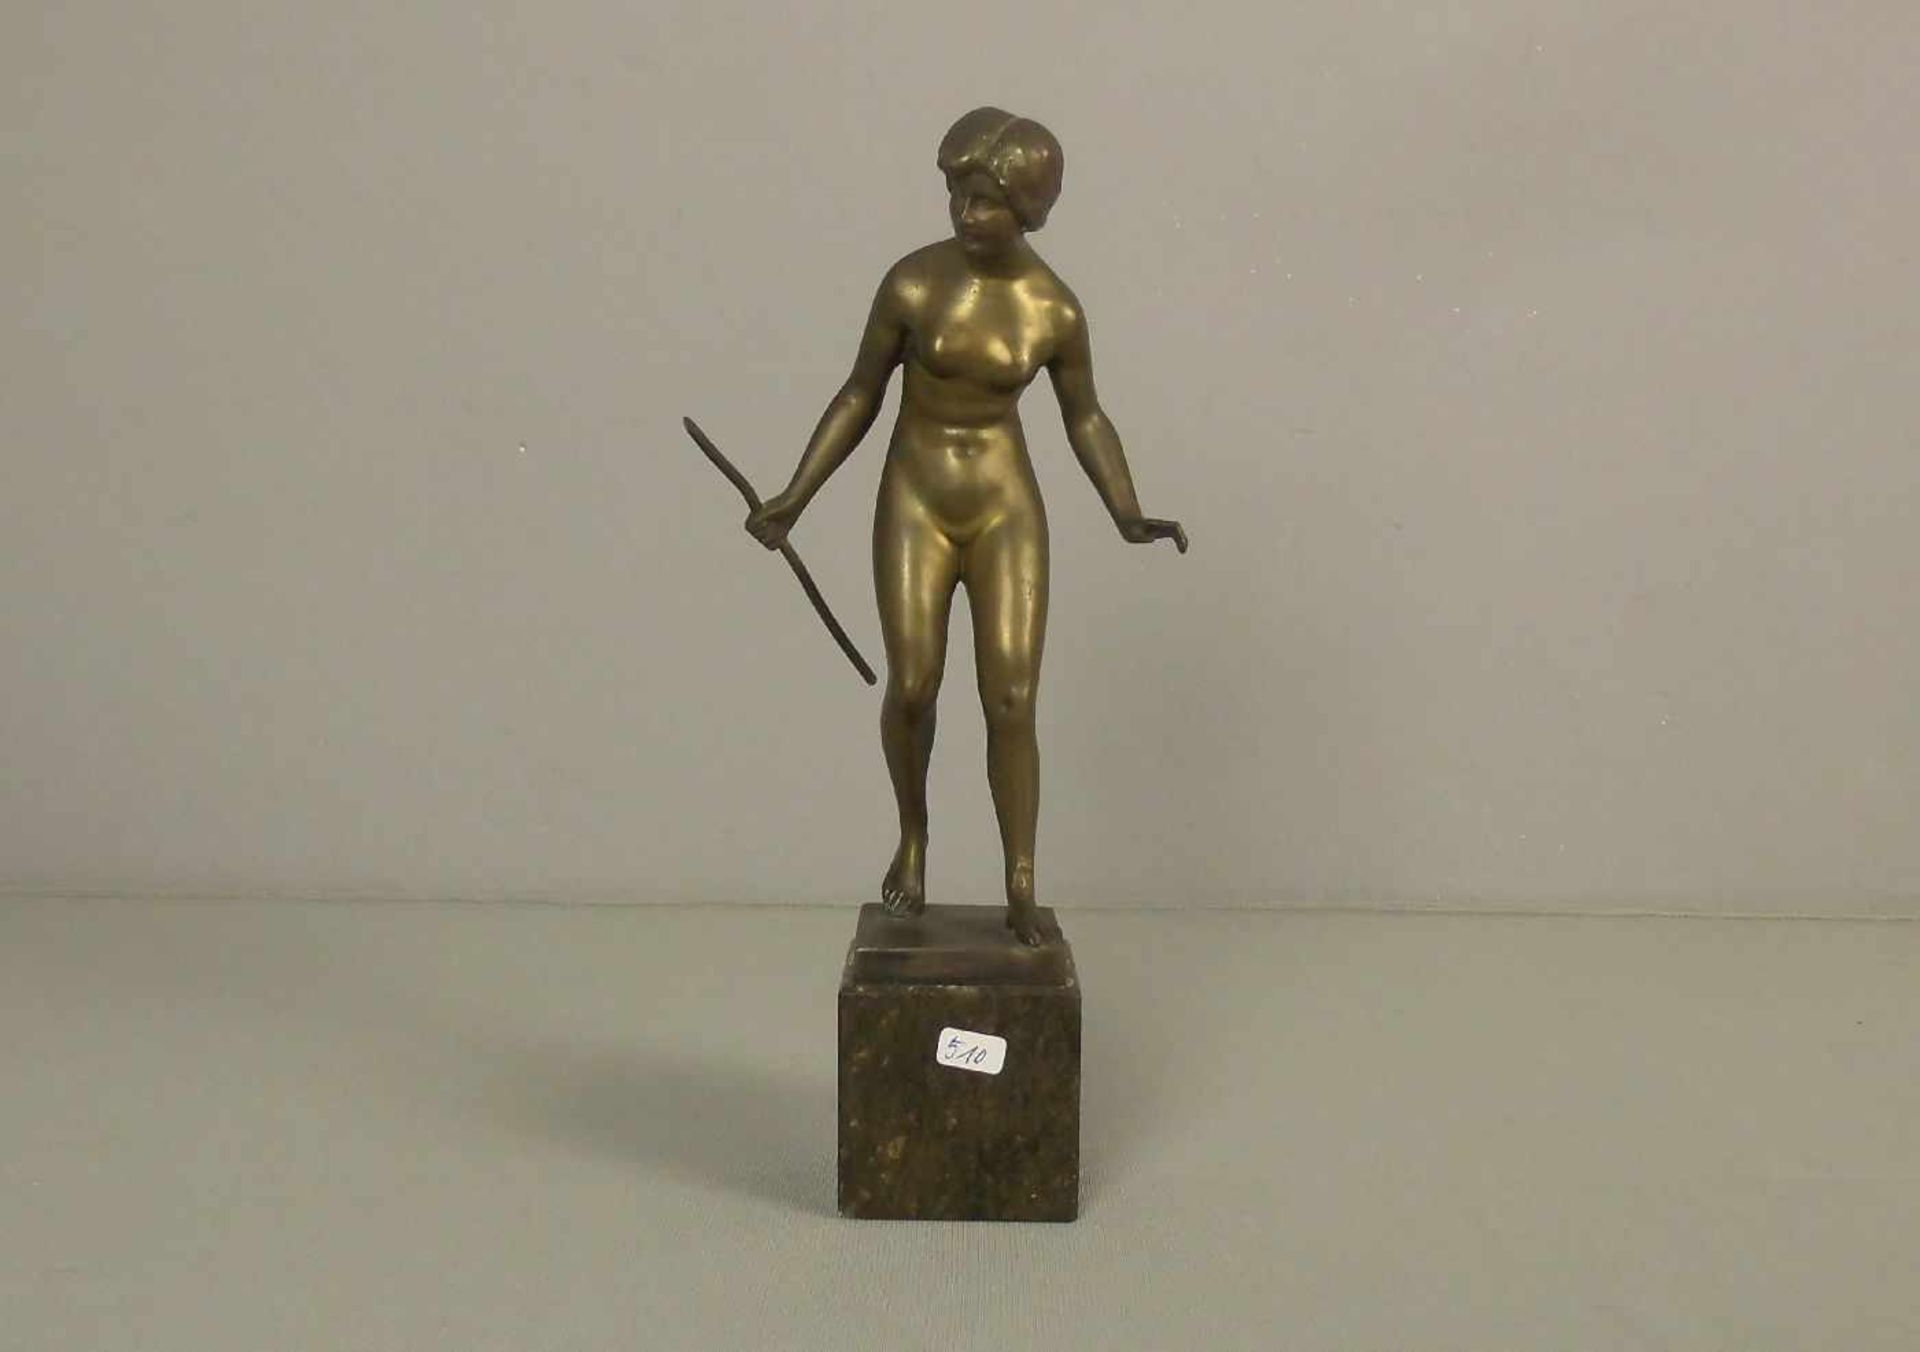 KECK, HANS (deutscher Bildhauer, 19./20. Jh.), Skulptur / sculpture: "Diana", , um 1920, Bronze